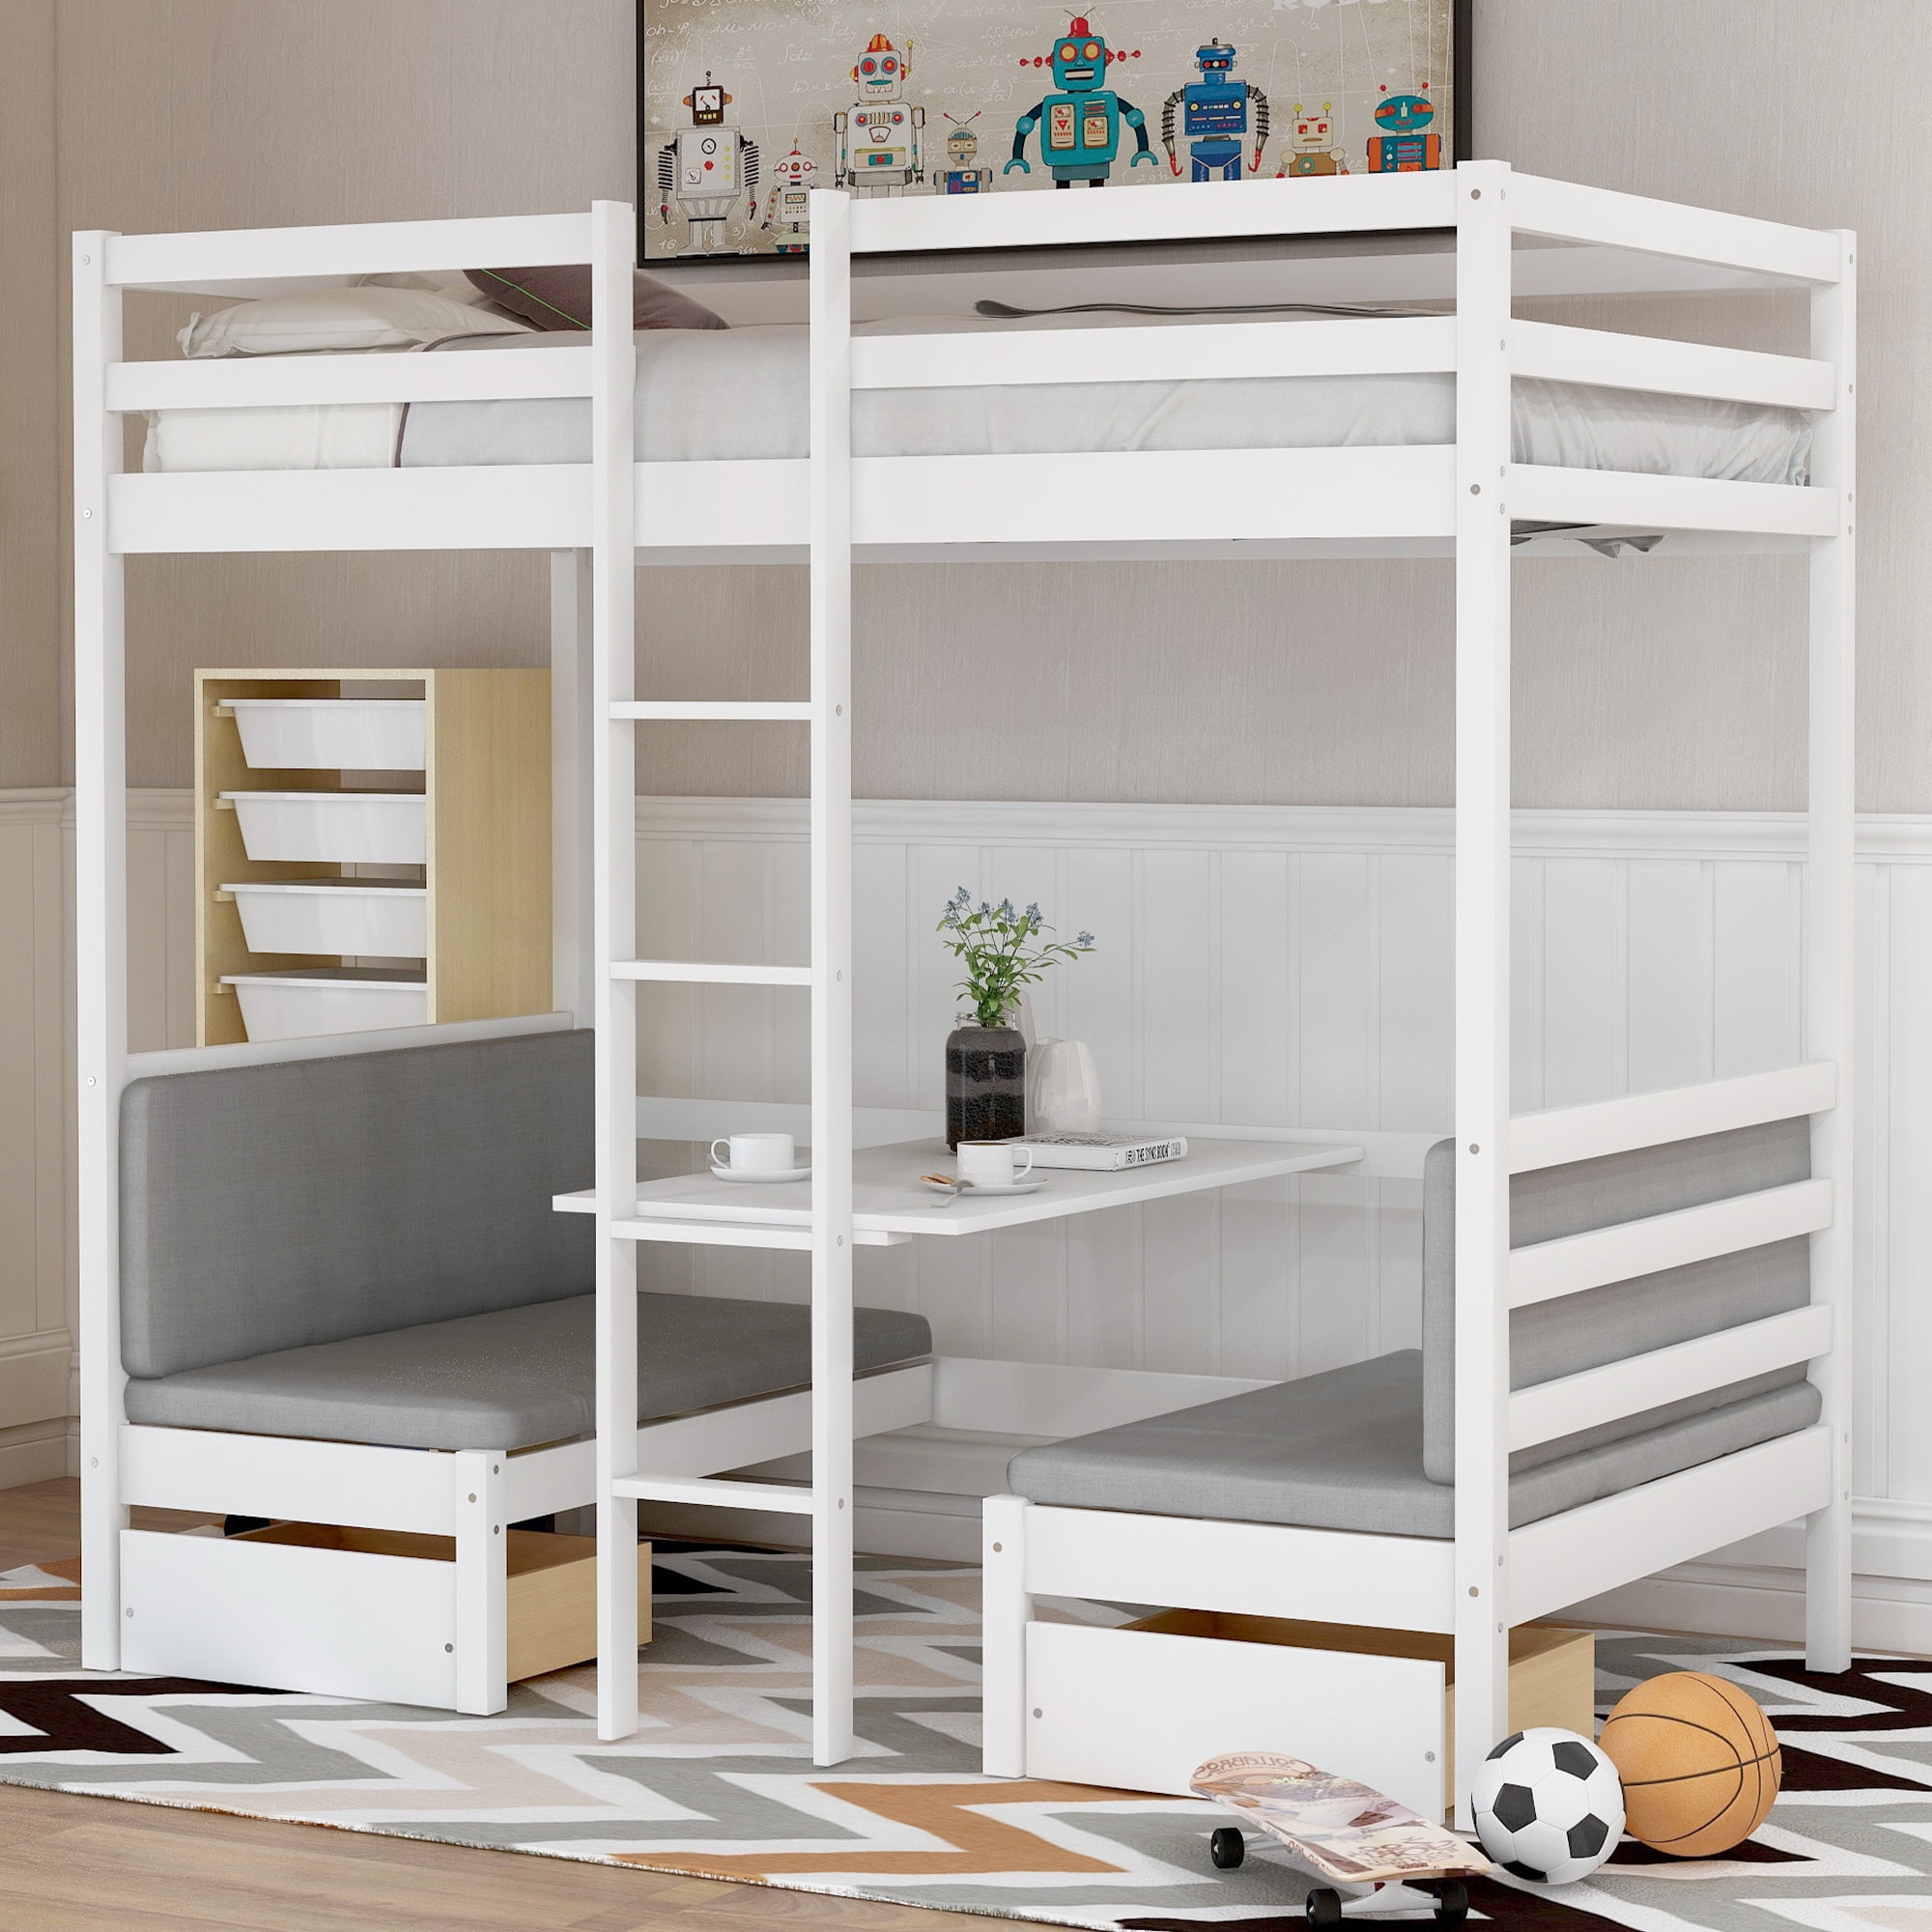 Euroco Solid Wood Convertible Twin Bunk, Bunk Beds With Bookshelf Headboards